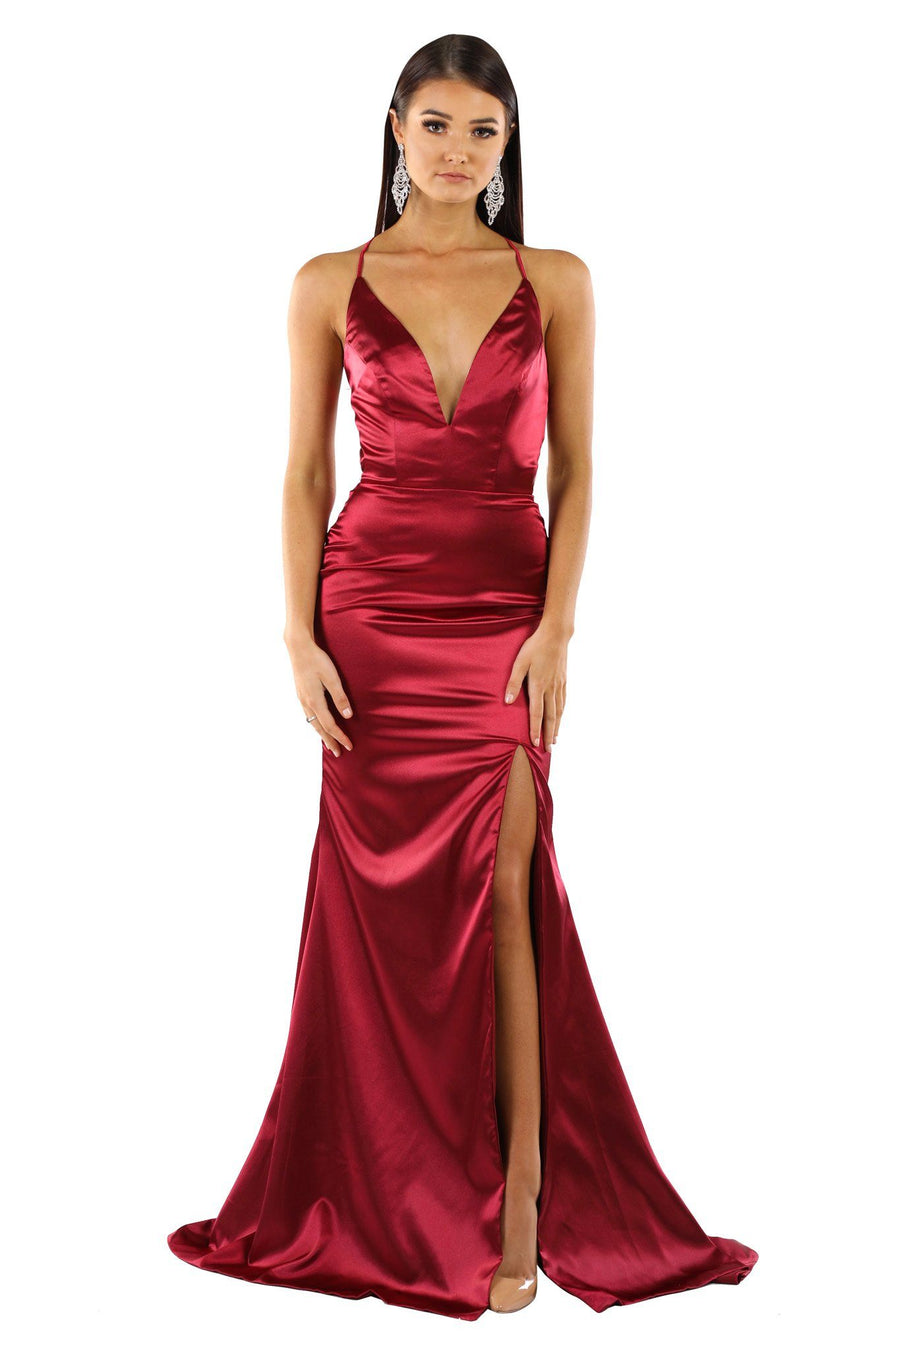 Formal Dresses Australia | Sparkly Formal Dresses | Noodz Boutique